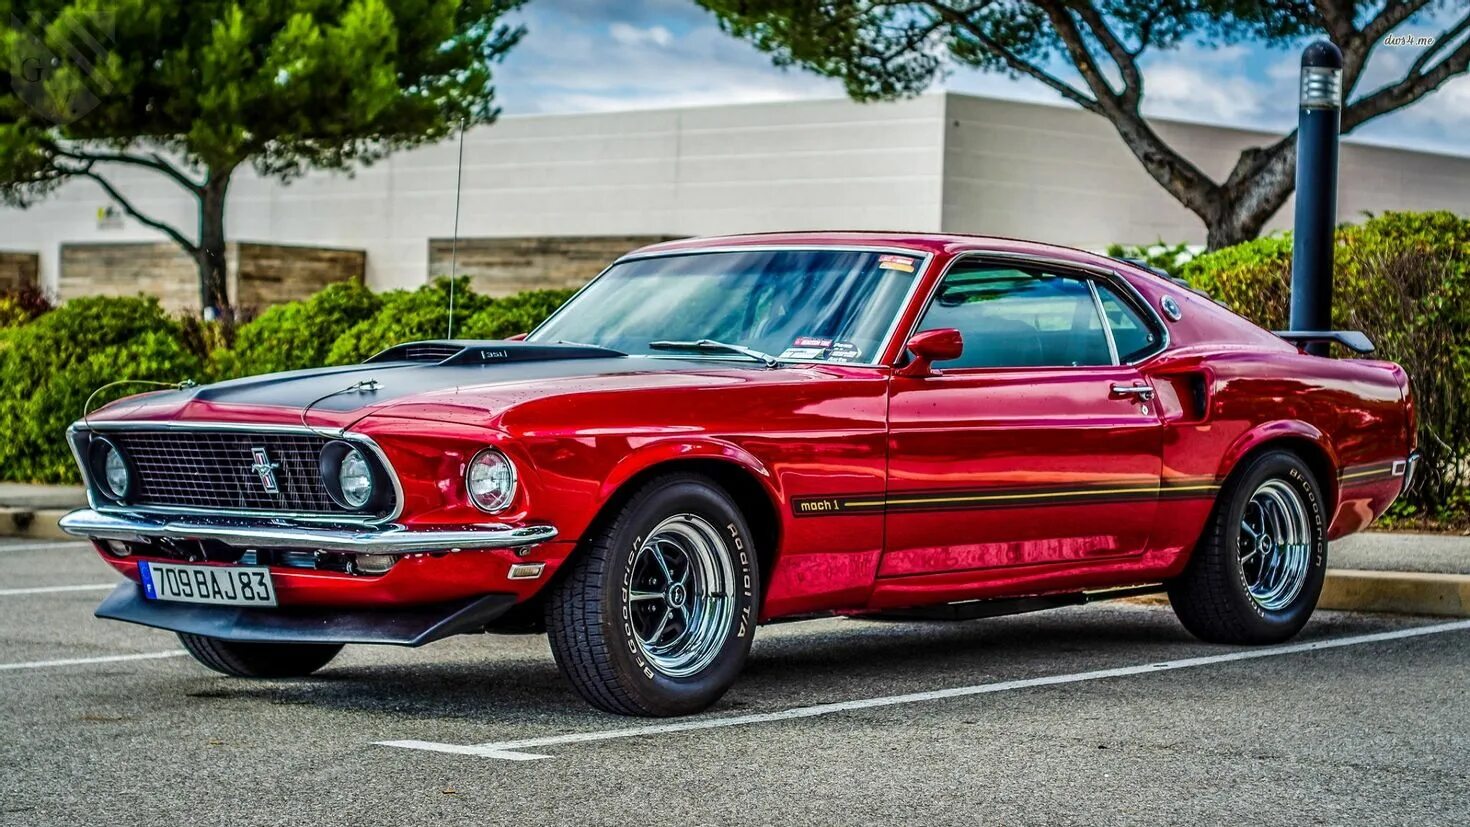 Форд Мустанг 1969. Ford Mustang Mach 1 1969. Форд Мустанг 1969 красный. Ford Mustang Mach 1 1967. Первые мустанги